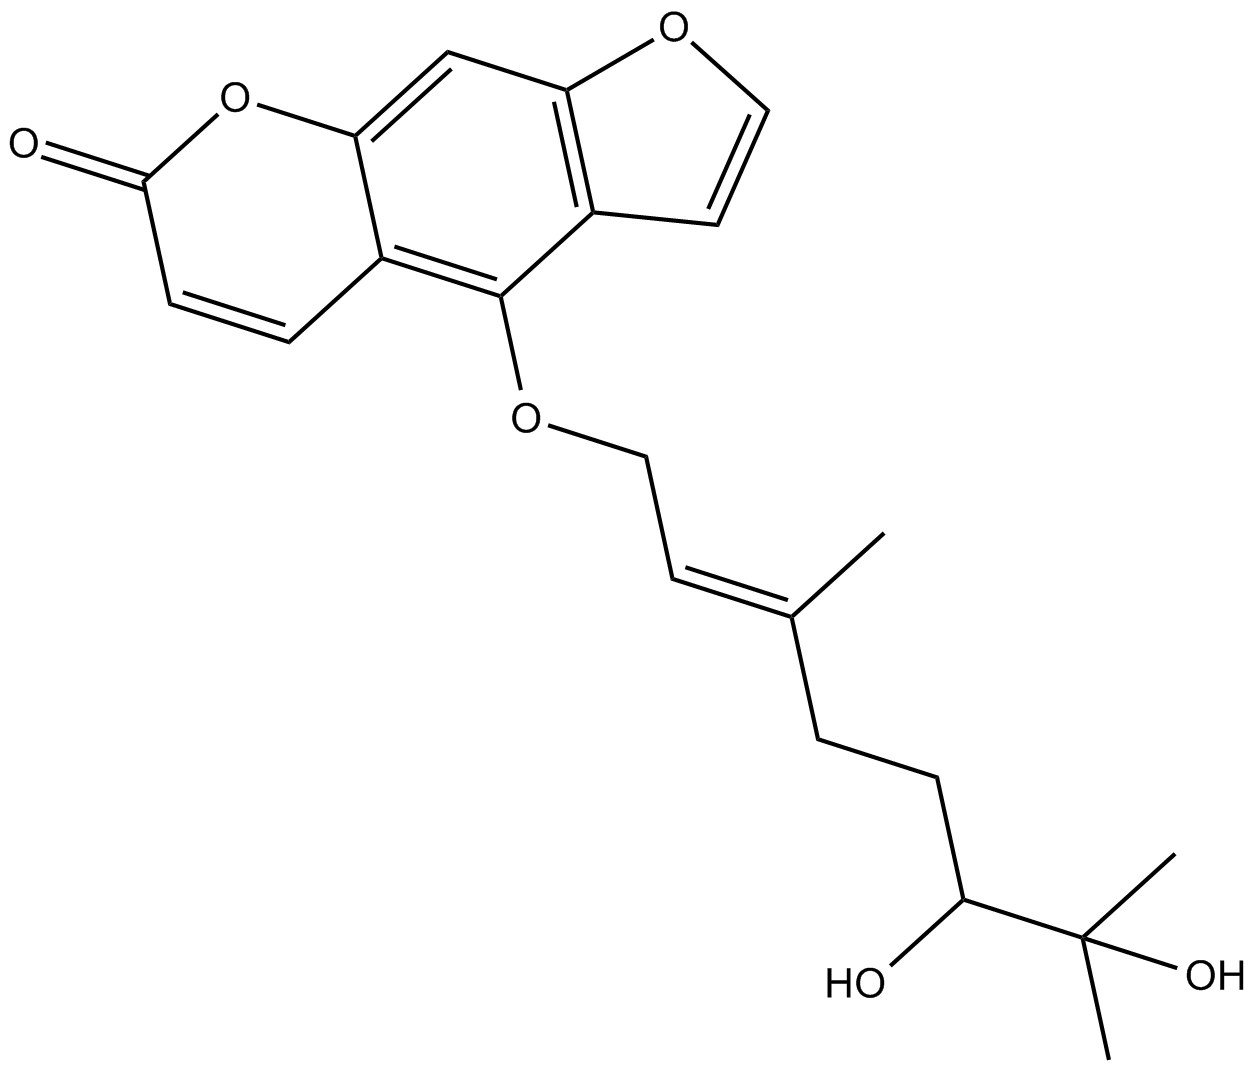 6,7-dihydroxy Bergamottin  Chemical Structure